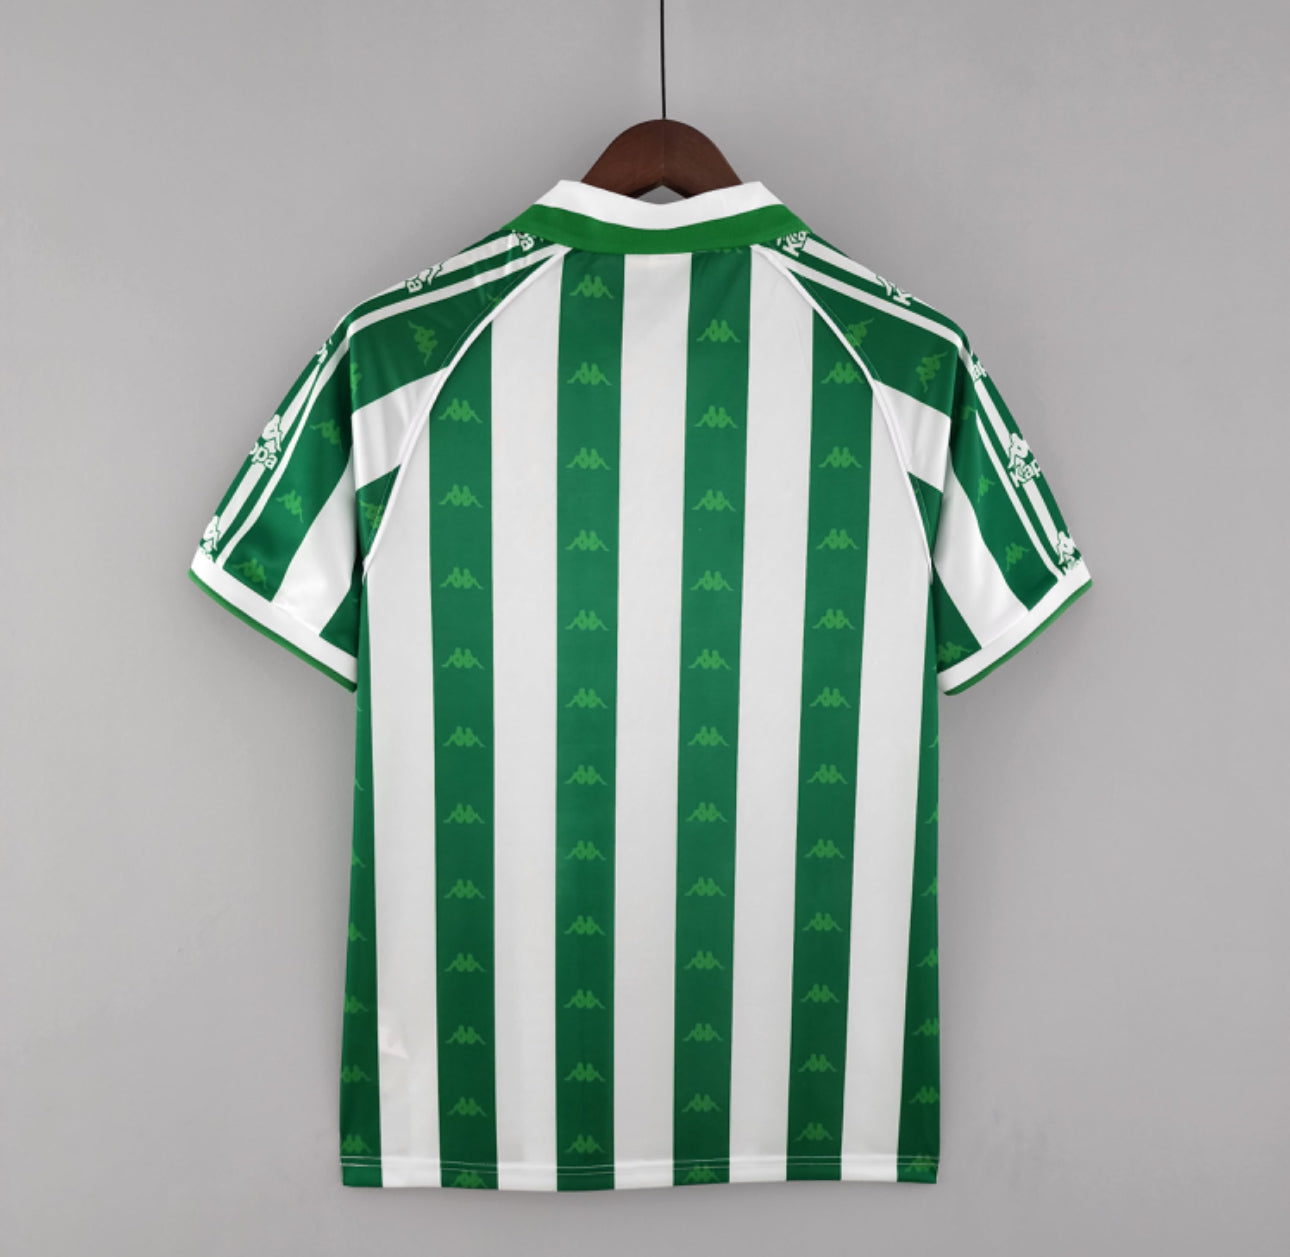 96/97 Real Betis Home Kit